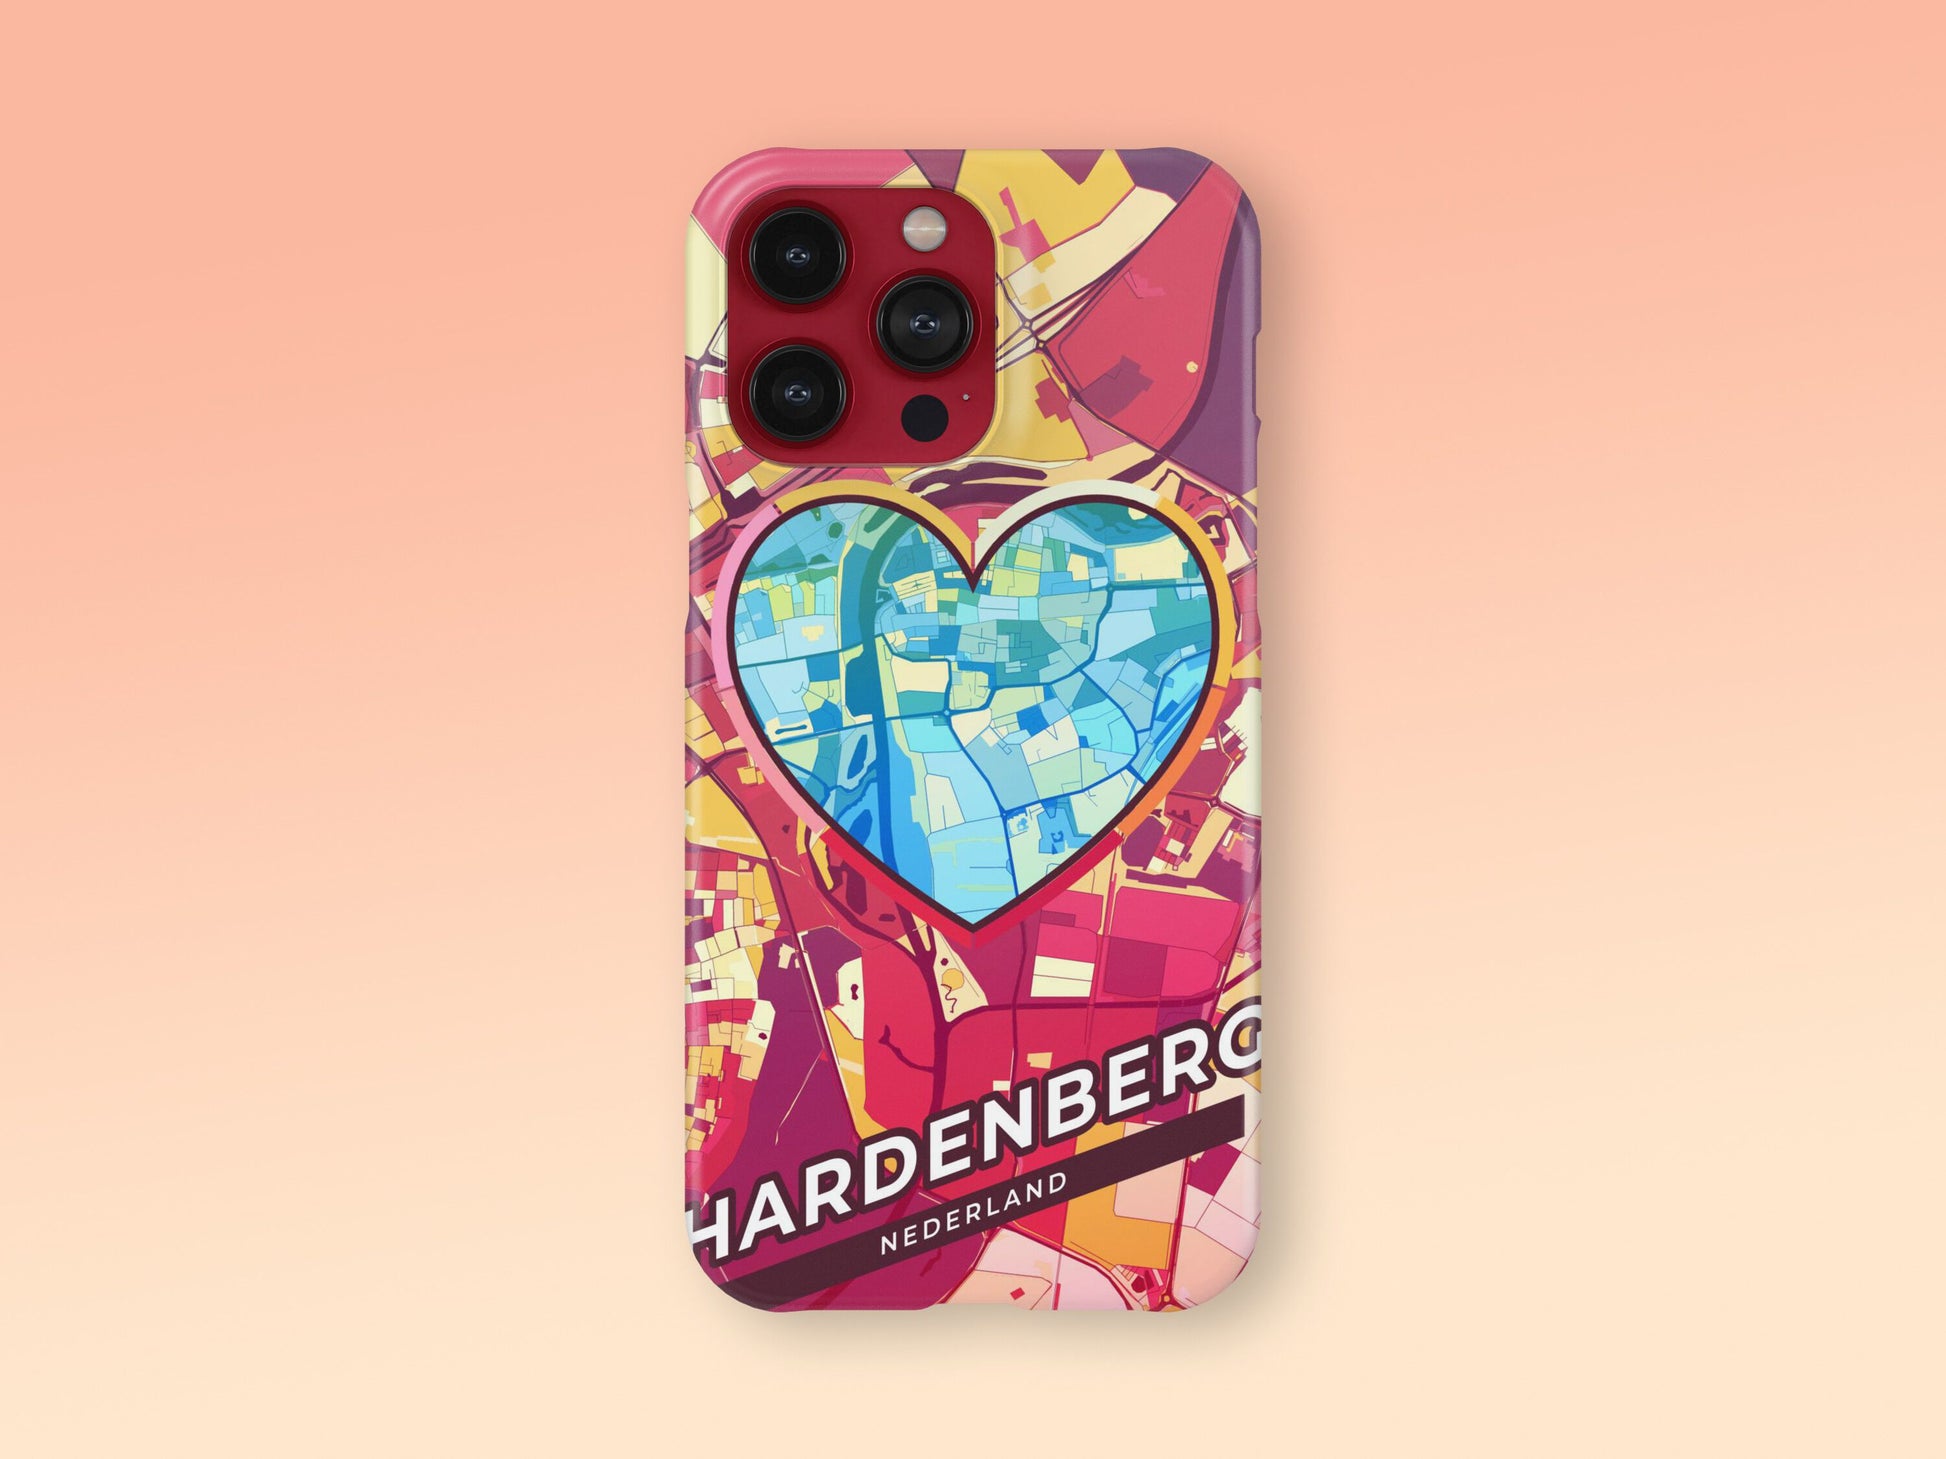 Hardenberg Netherlands slim phone case with colorful icon. Birthday, wedding or housewarming gift. Couple match cases. 2